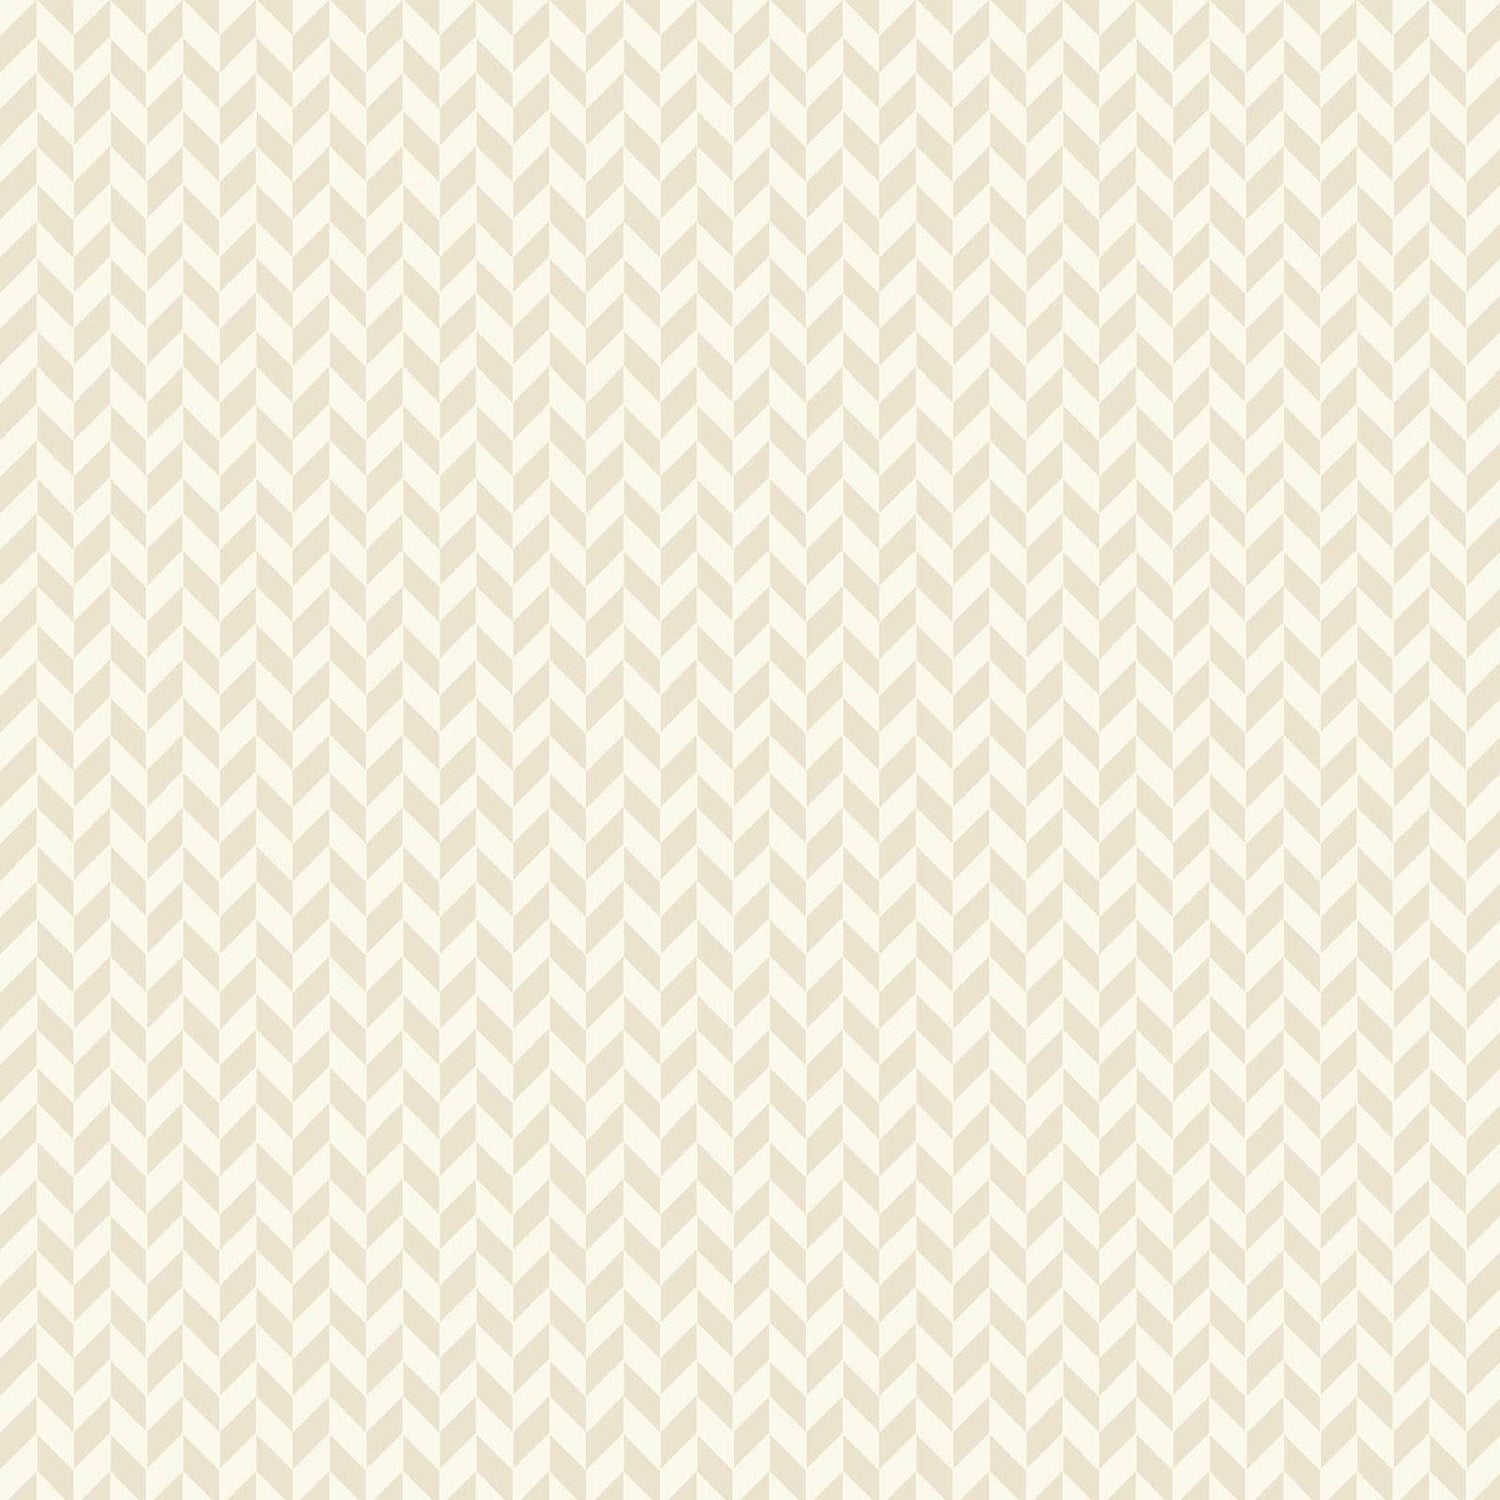 Cream Herringbone Texture Designed by Kim Christopherson of Kimberbell Designs for Maywood Studios